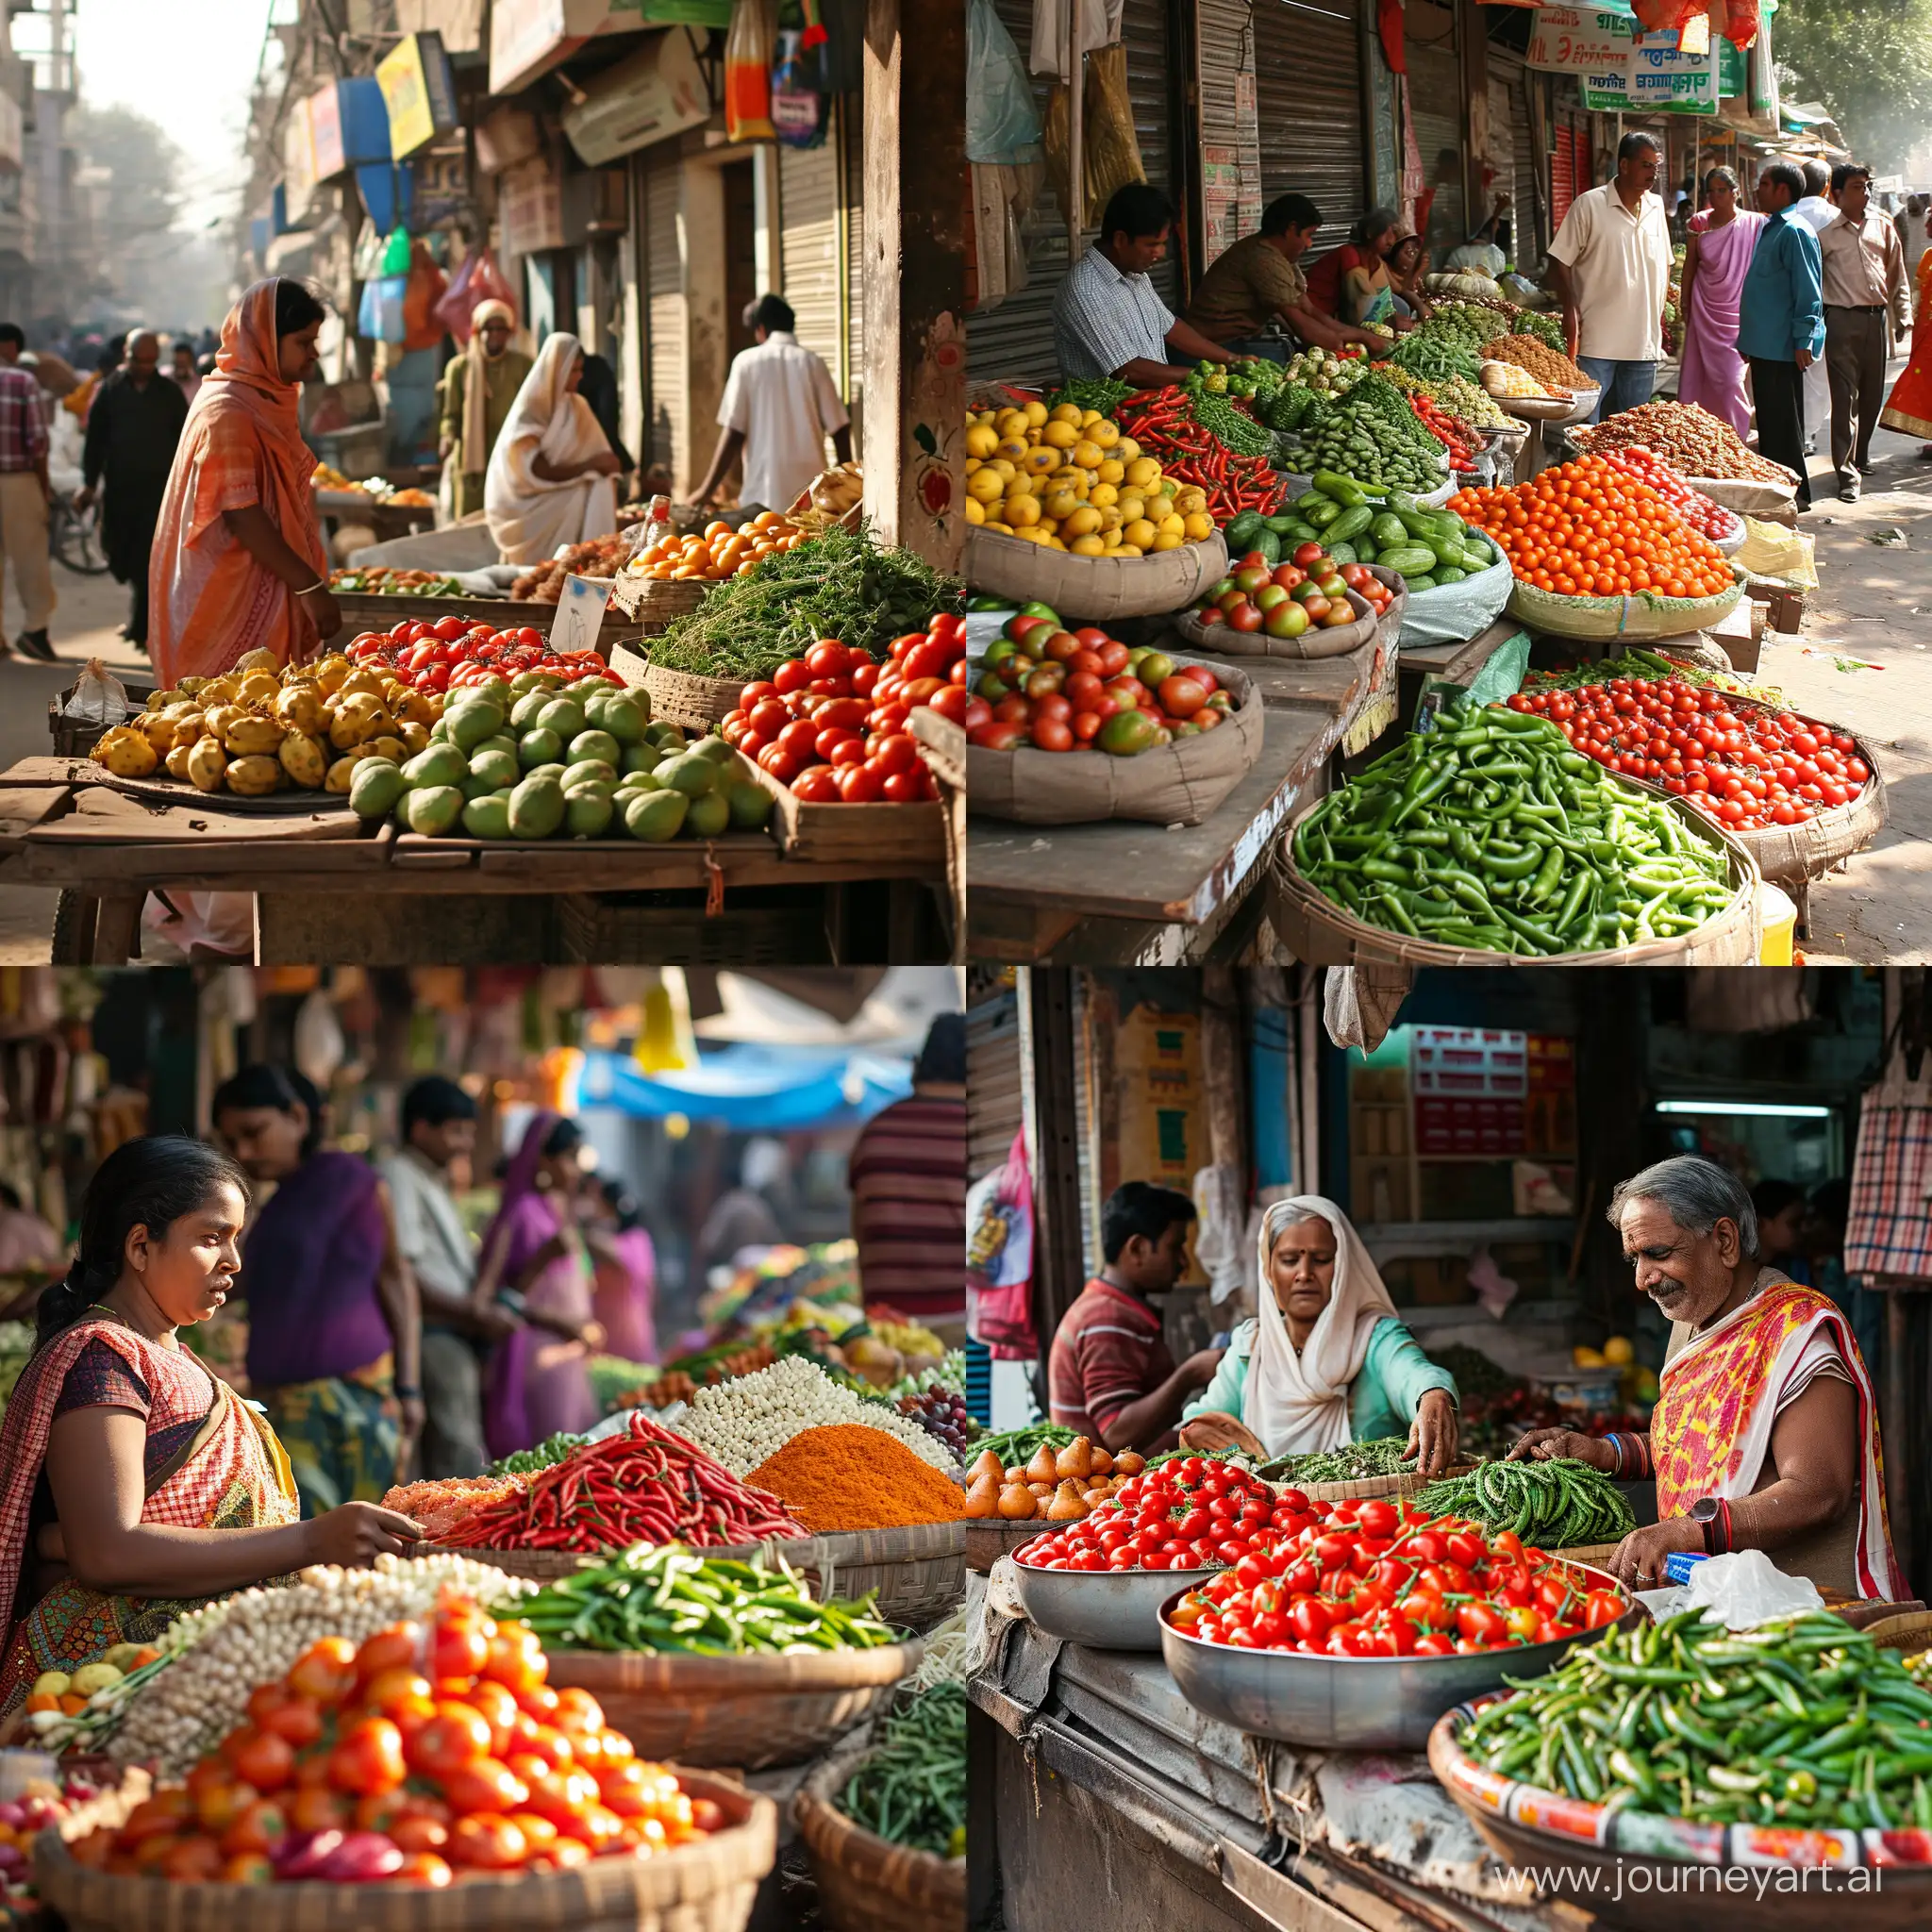 Vibrant-Indian-Market-Scene-with-Versatile-Artistic-Expression